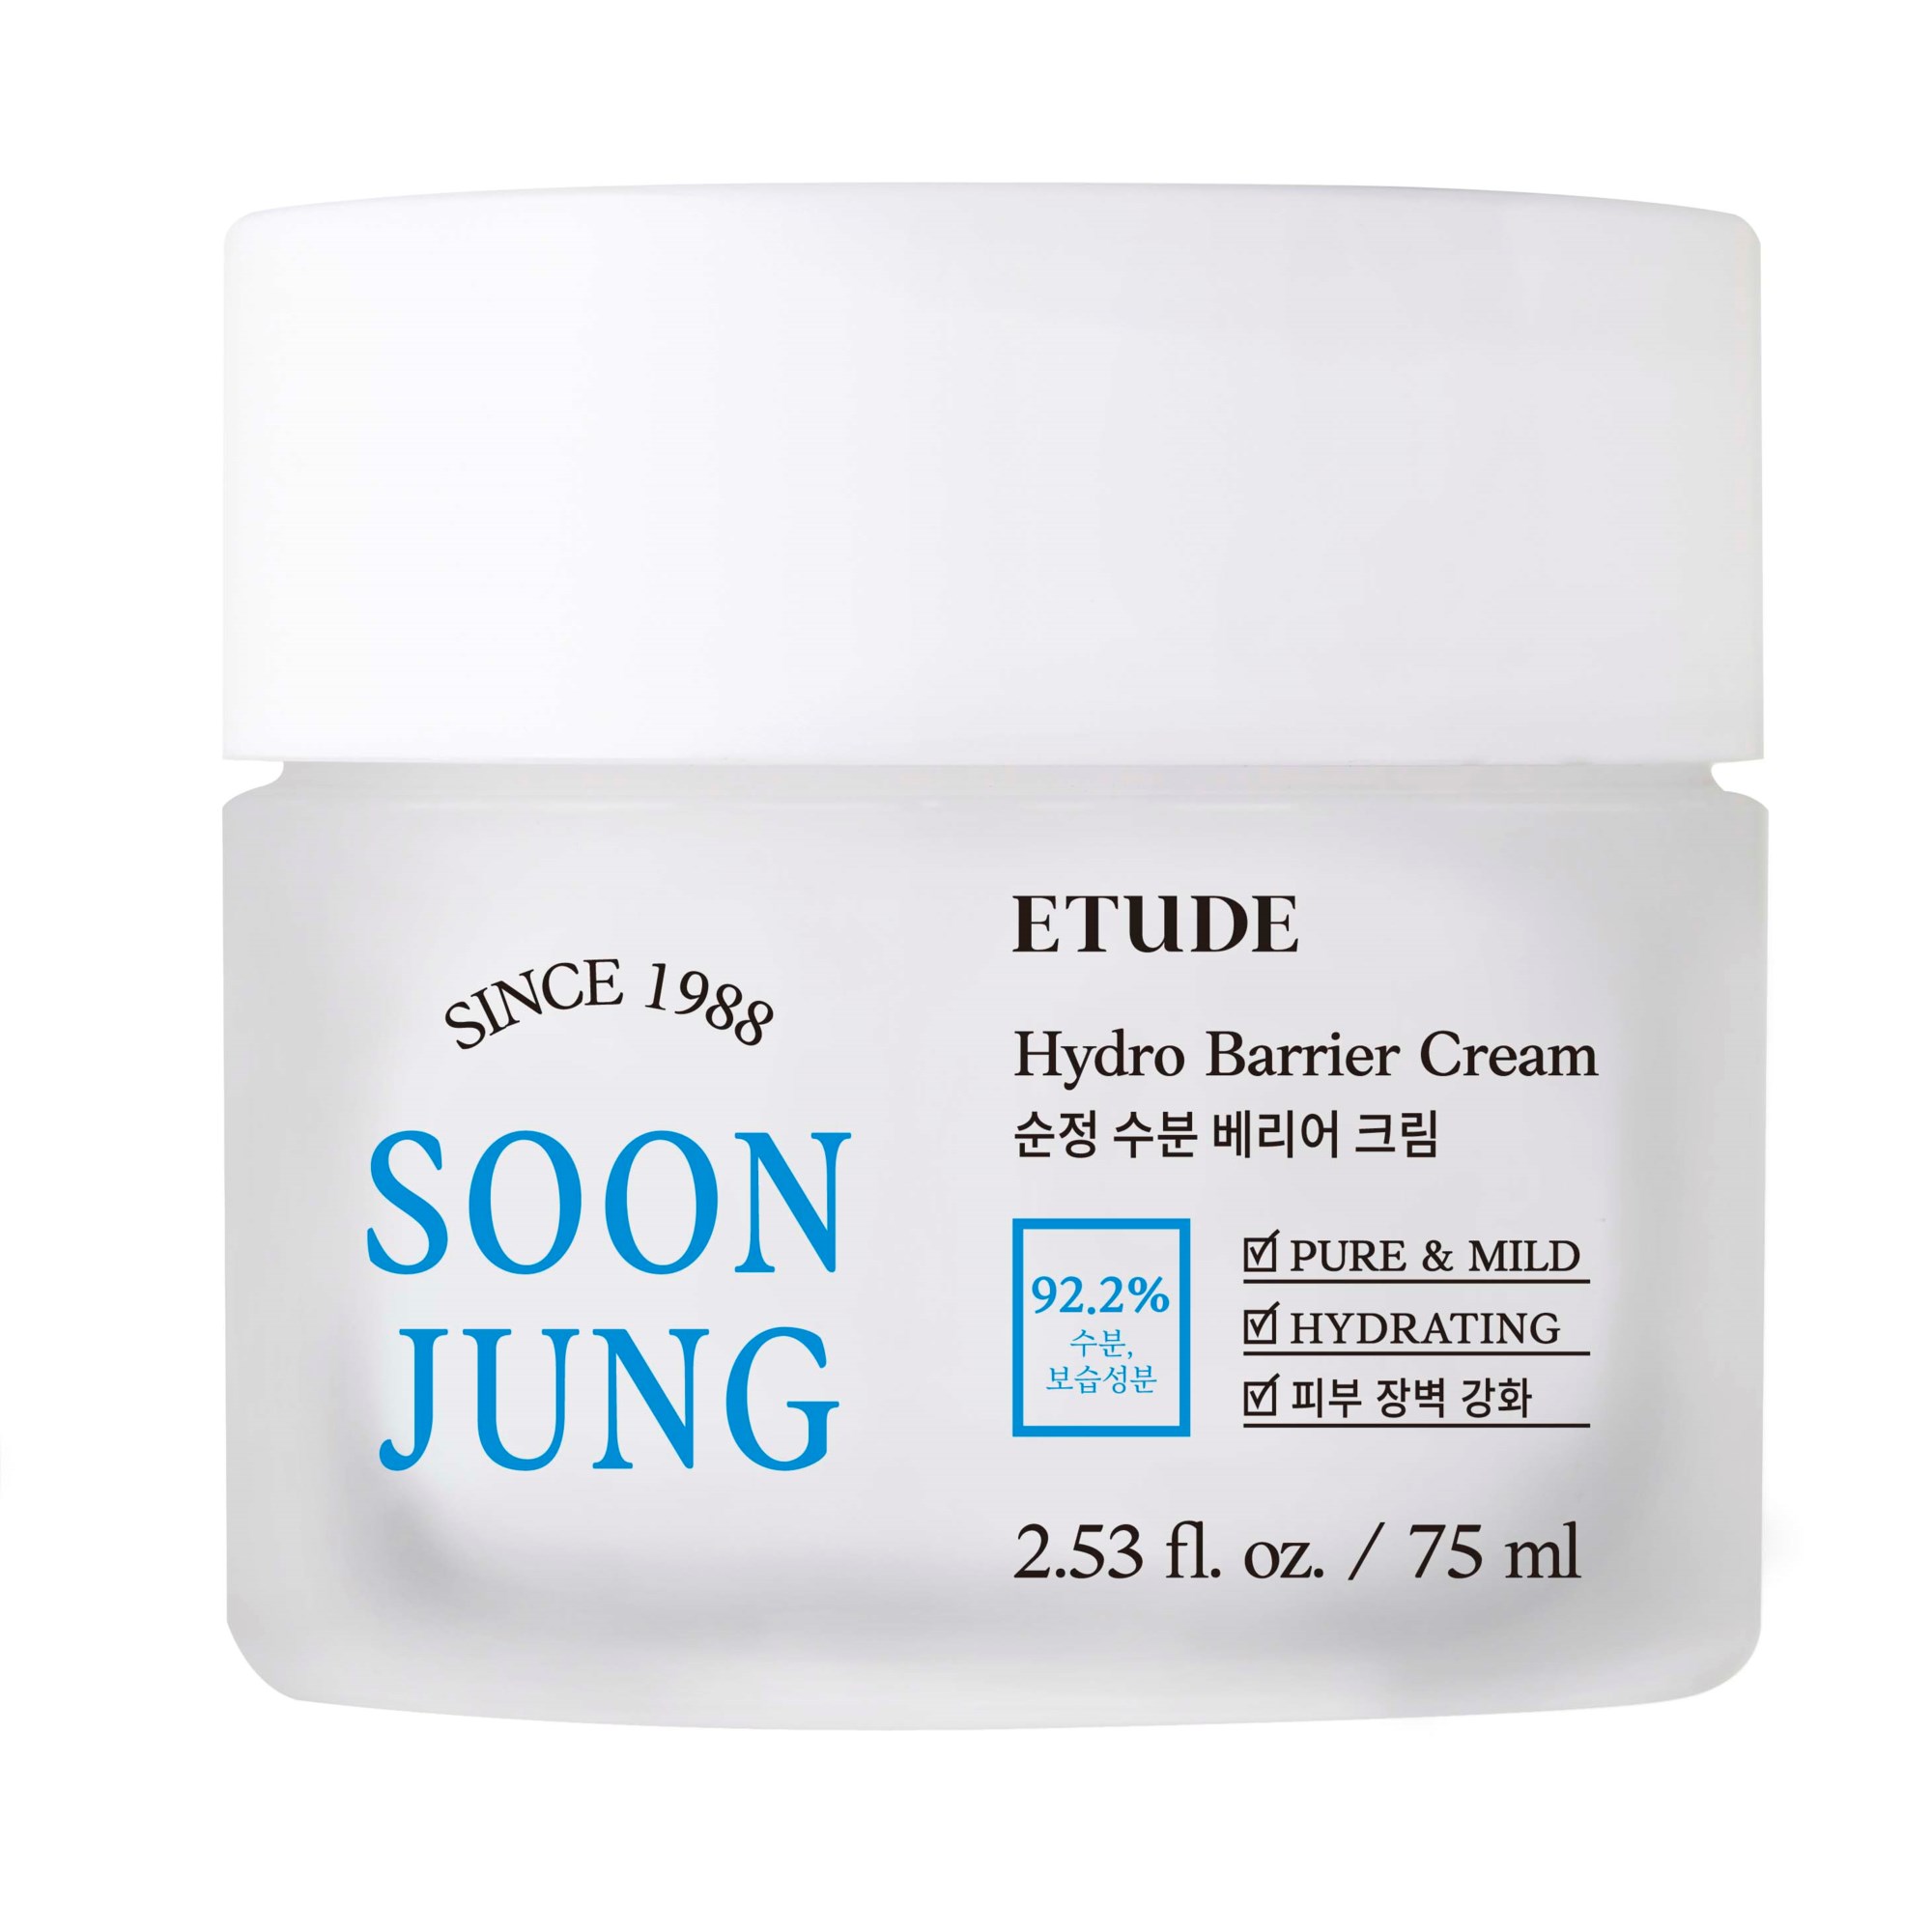 Etude Soon Jung Hydro Barrier Cream 75 ml